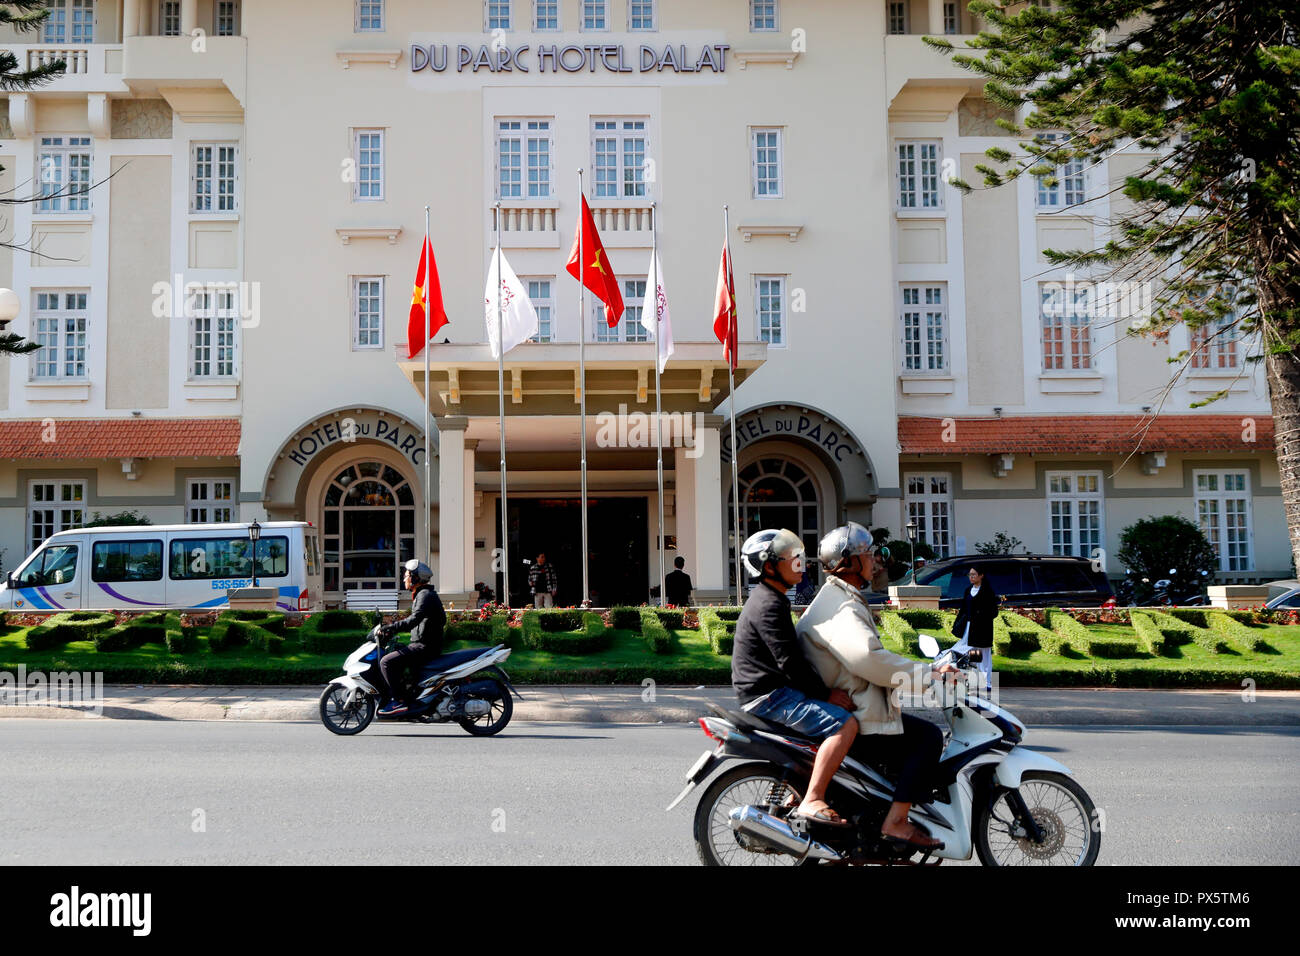 Du Park Hotel Dalat date francesi da tempo coloniale. Dalat. Il Vietnam. Foto Stock